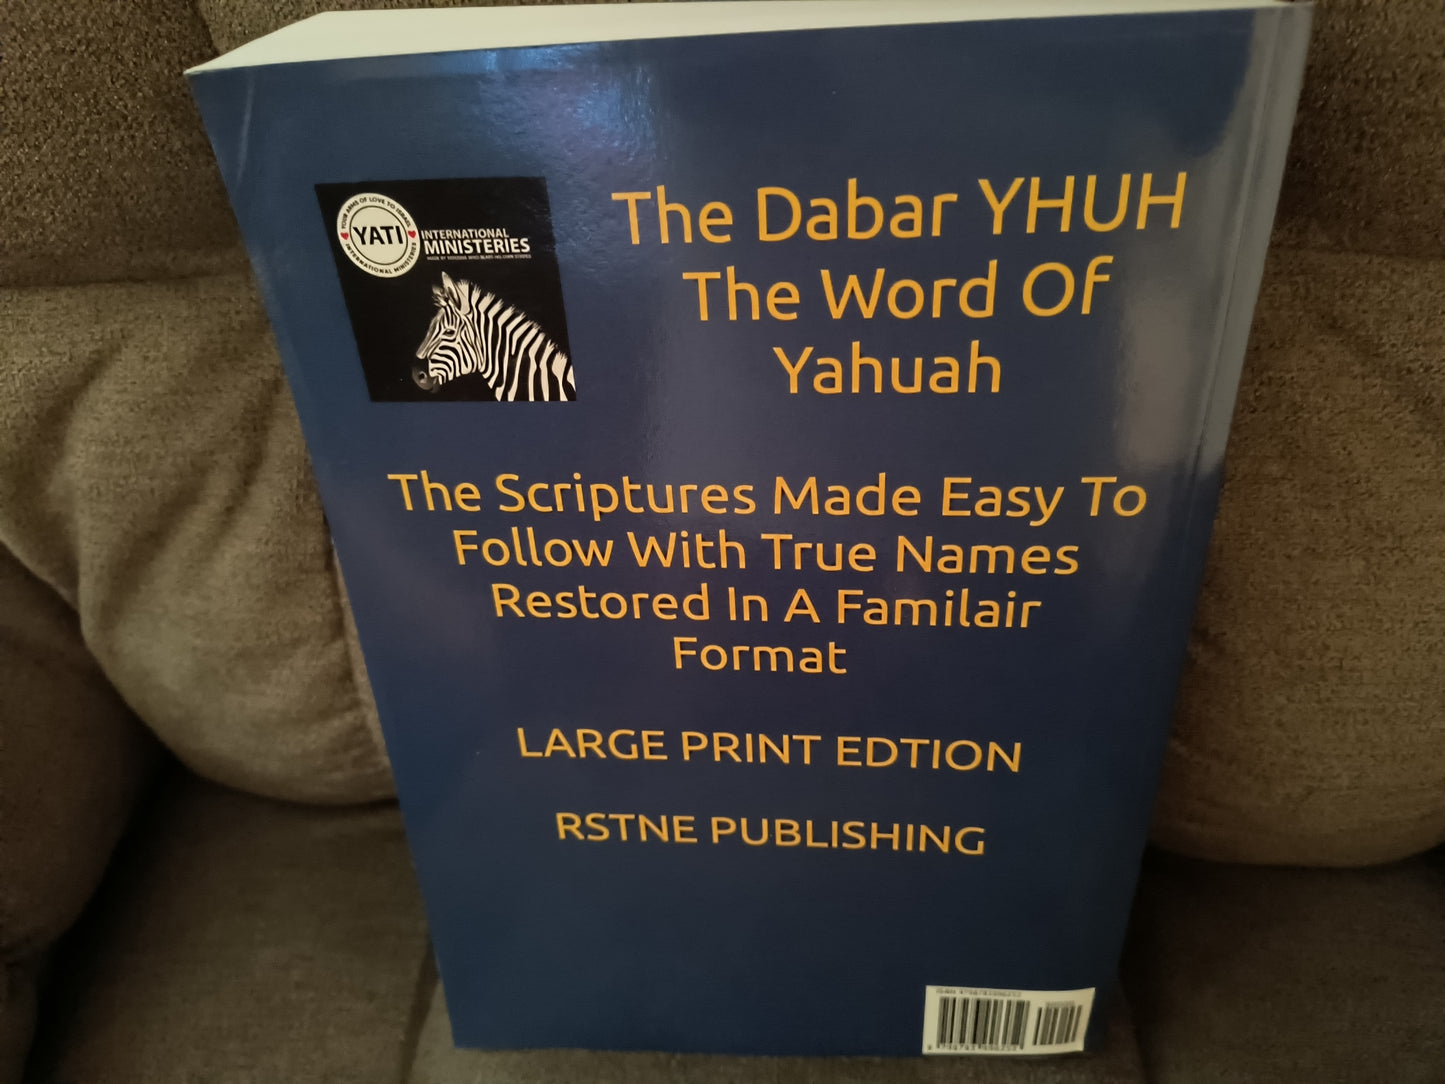 The Dabar YHWH-Large Print